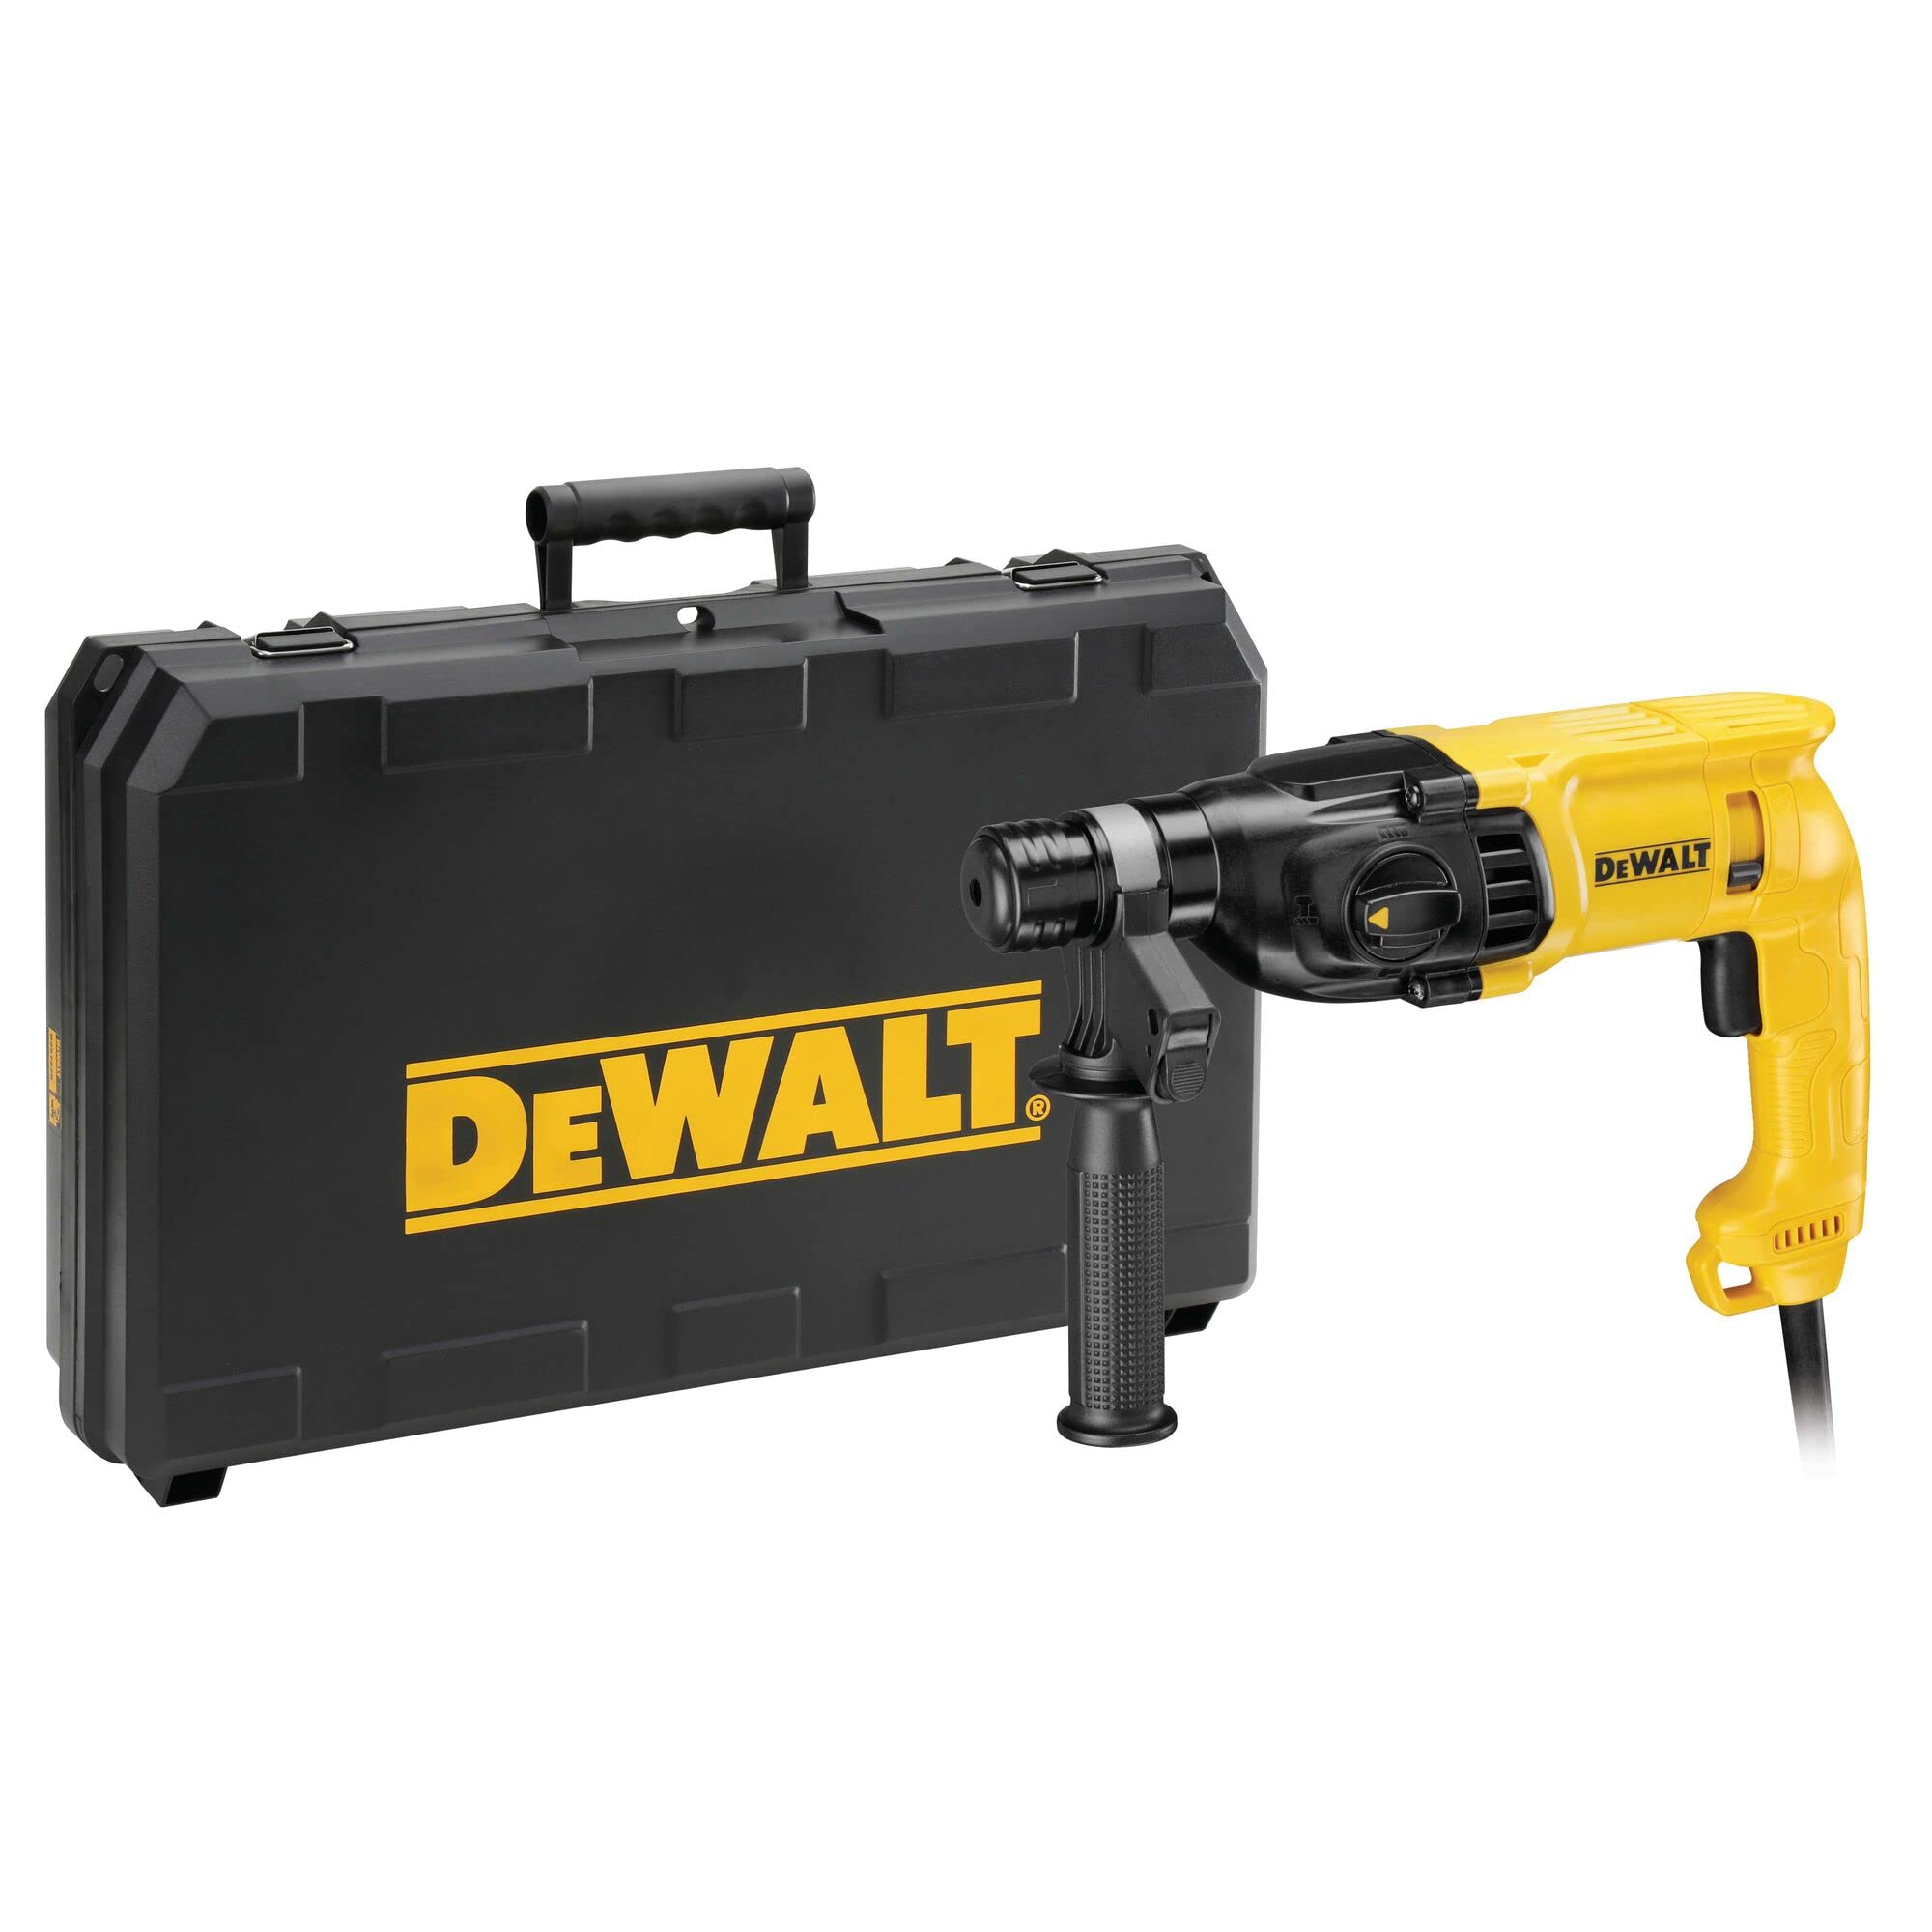 DEWALT D25033K-QS D25033K SDS Plus Kombihammer 22 mm, 710 W, 230 V, schwarz, gelb